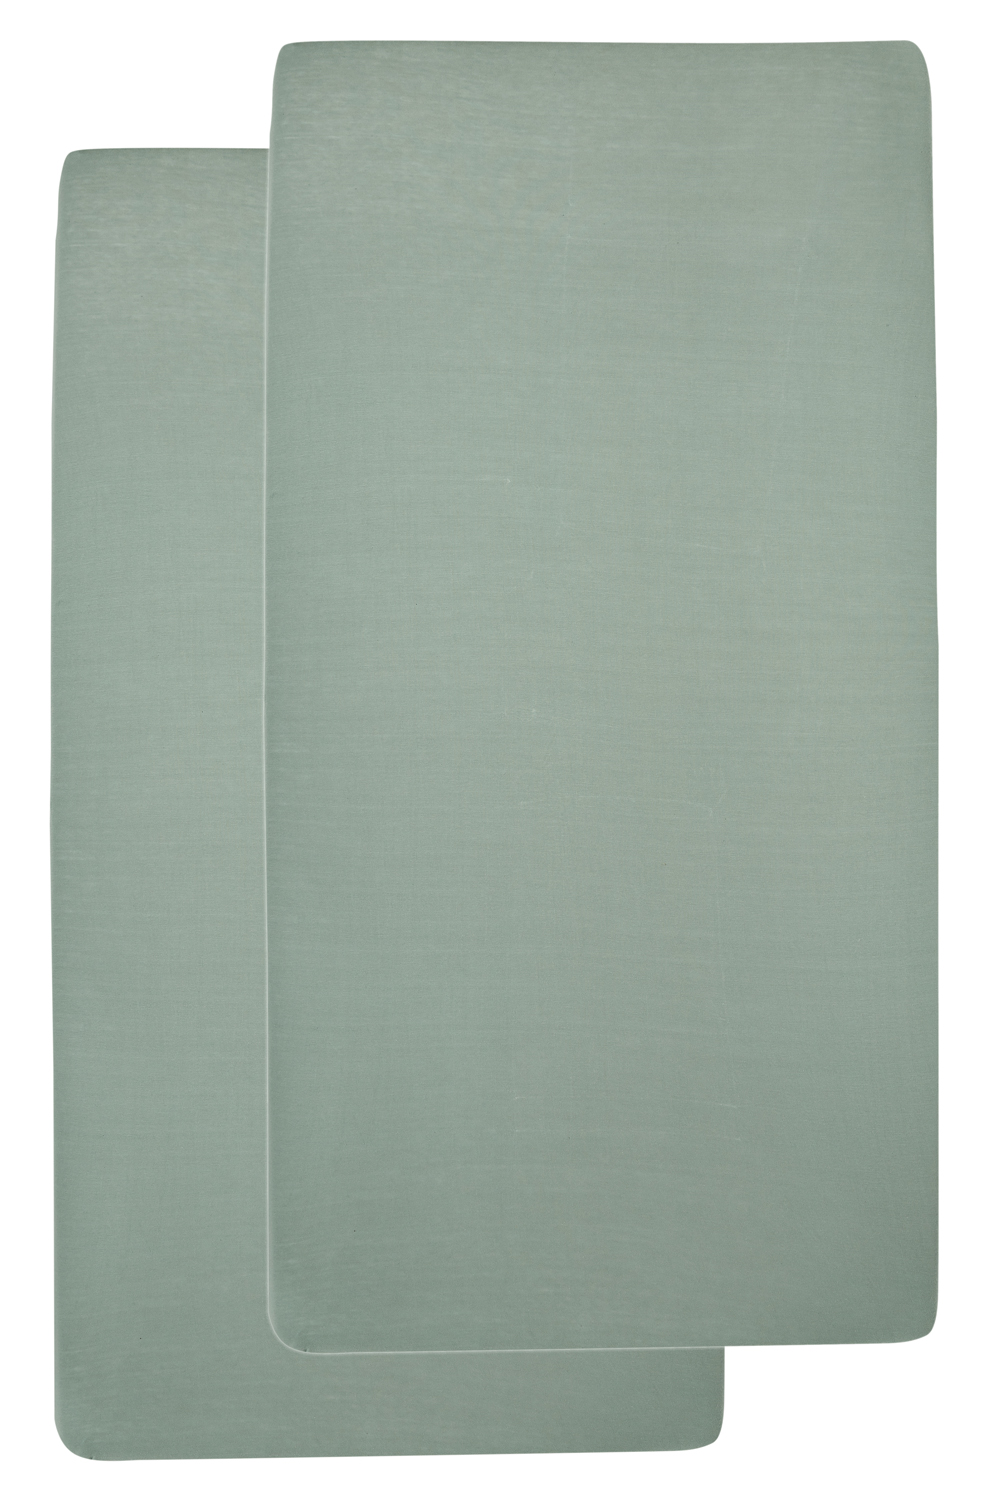 Jersey Hoeslaken 2-Pack - Stone Green - 40x80/90cm